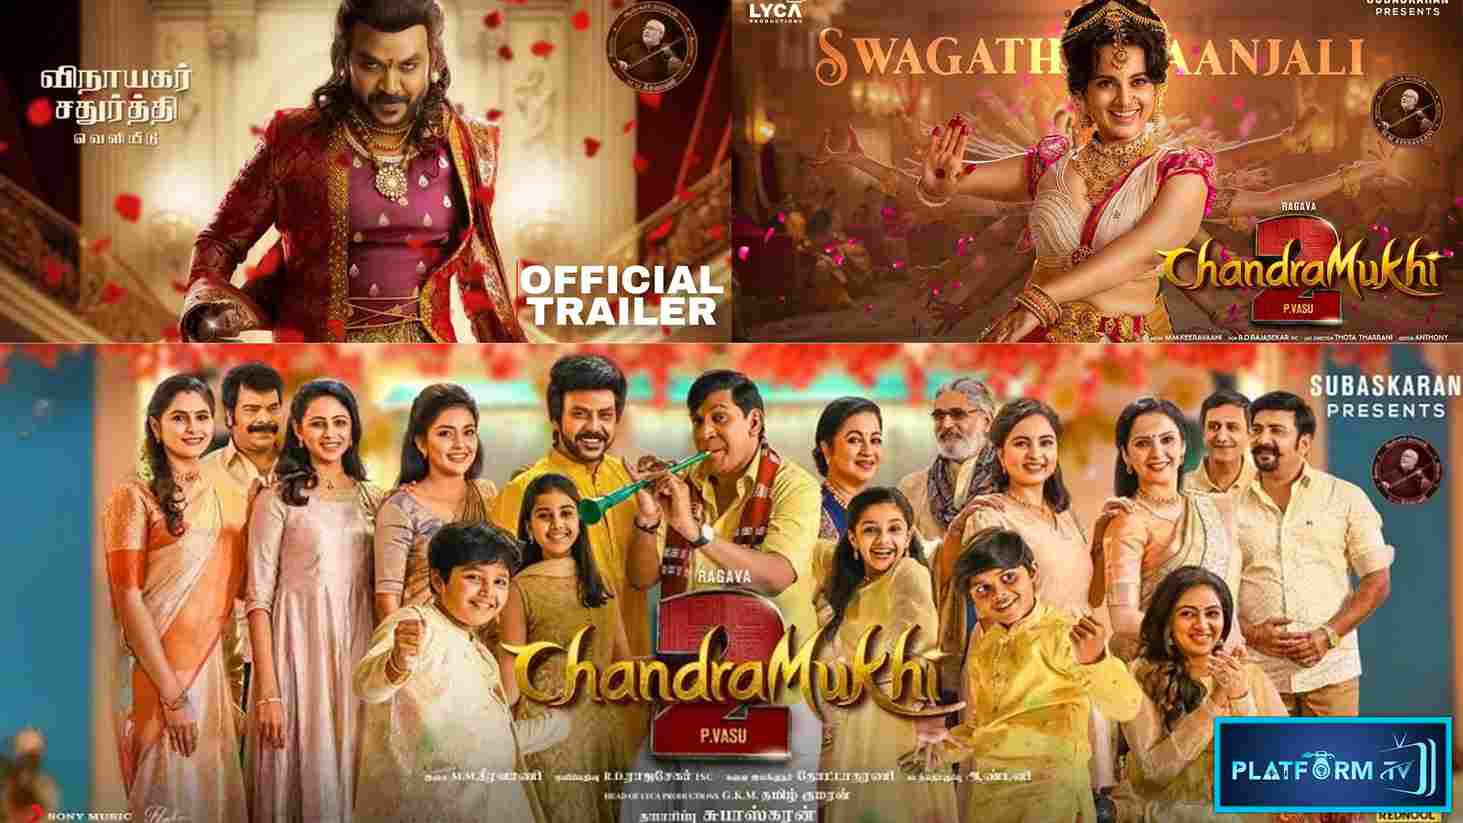 Chandramukhi 2 Official Trailer - Platform Tamil